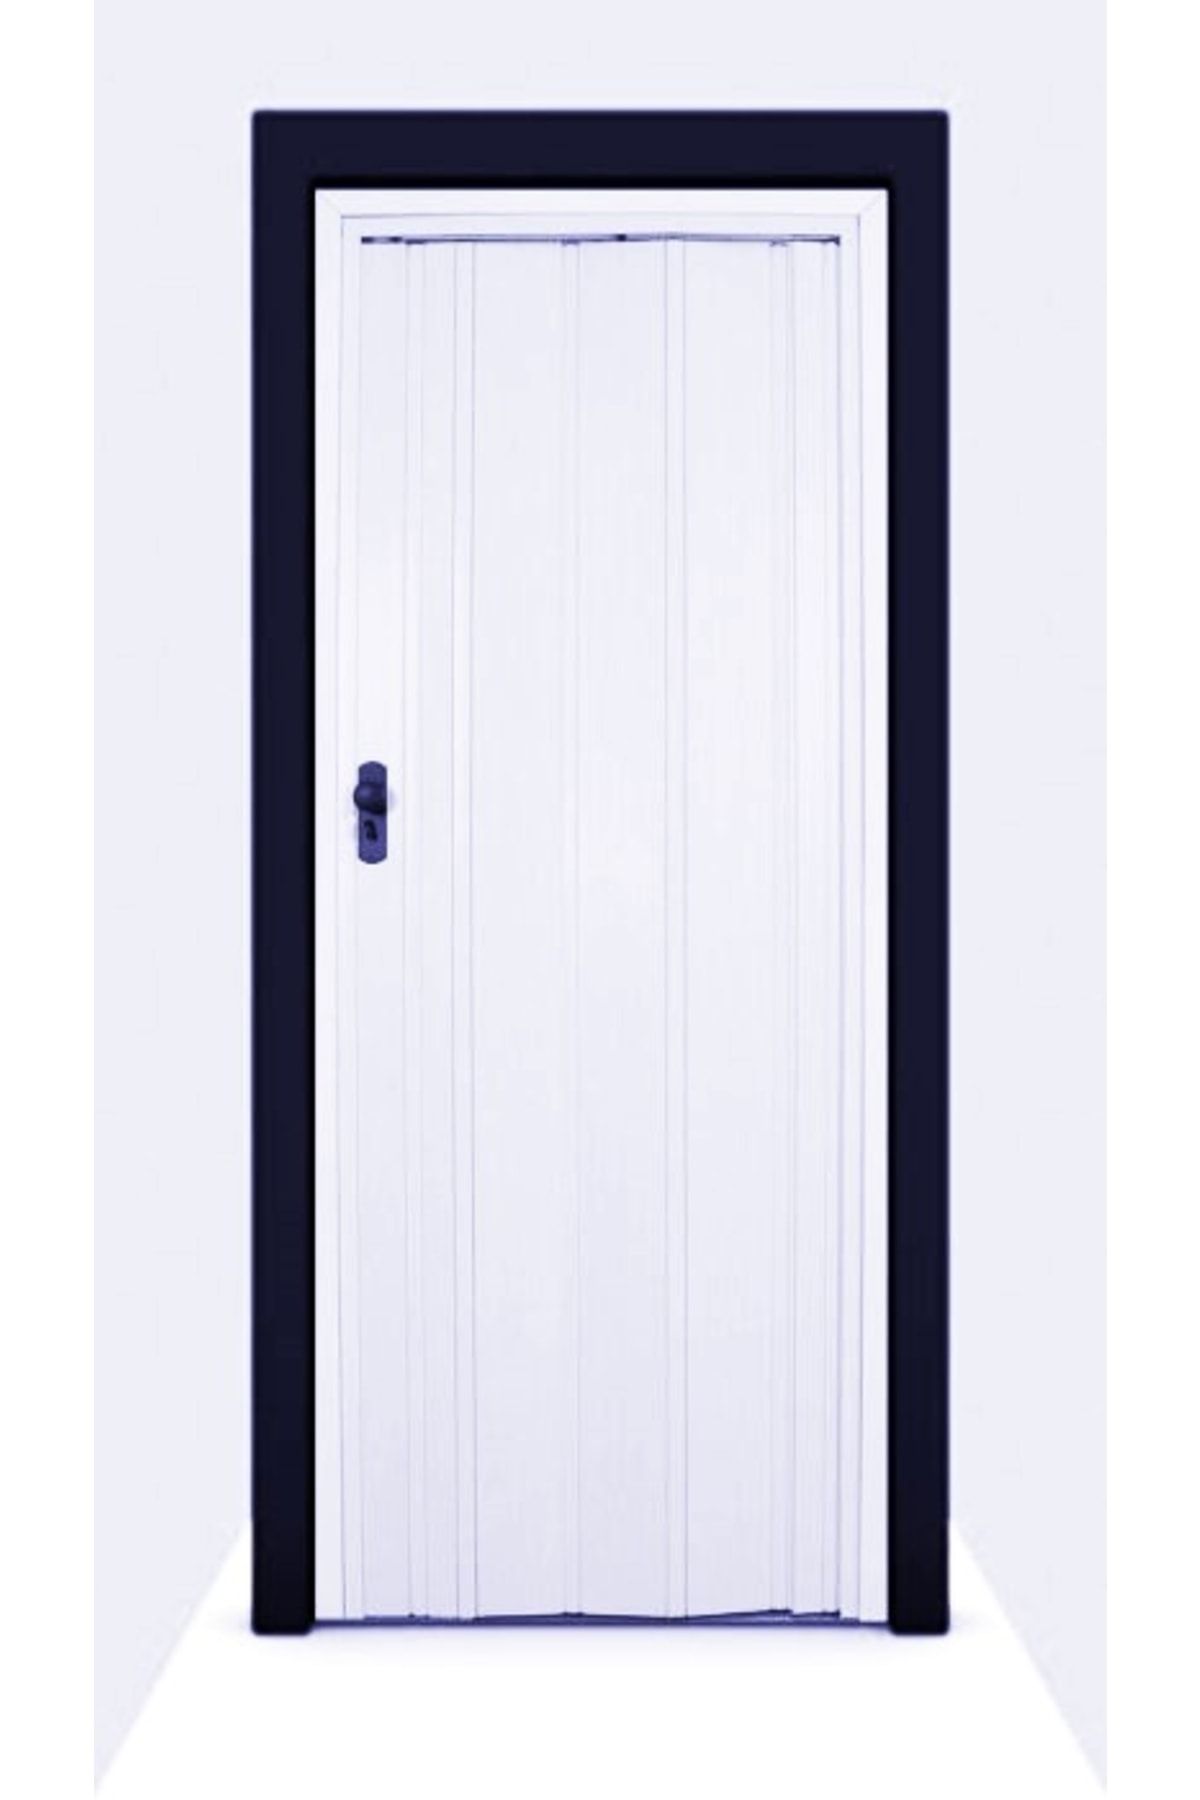 DEKORAKS Beyaz Düz Renkli Akordeon Kapı 72x200cm